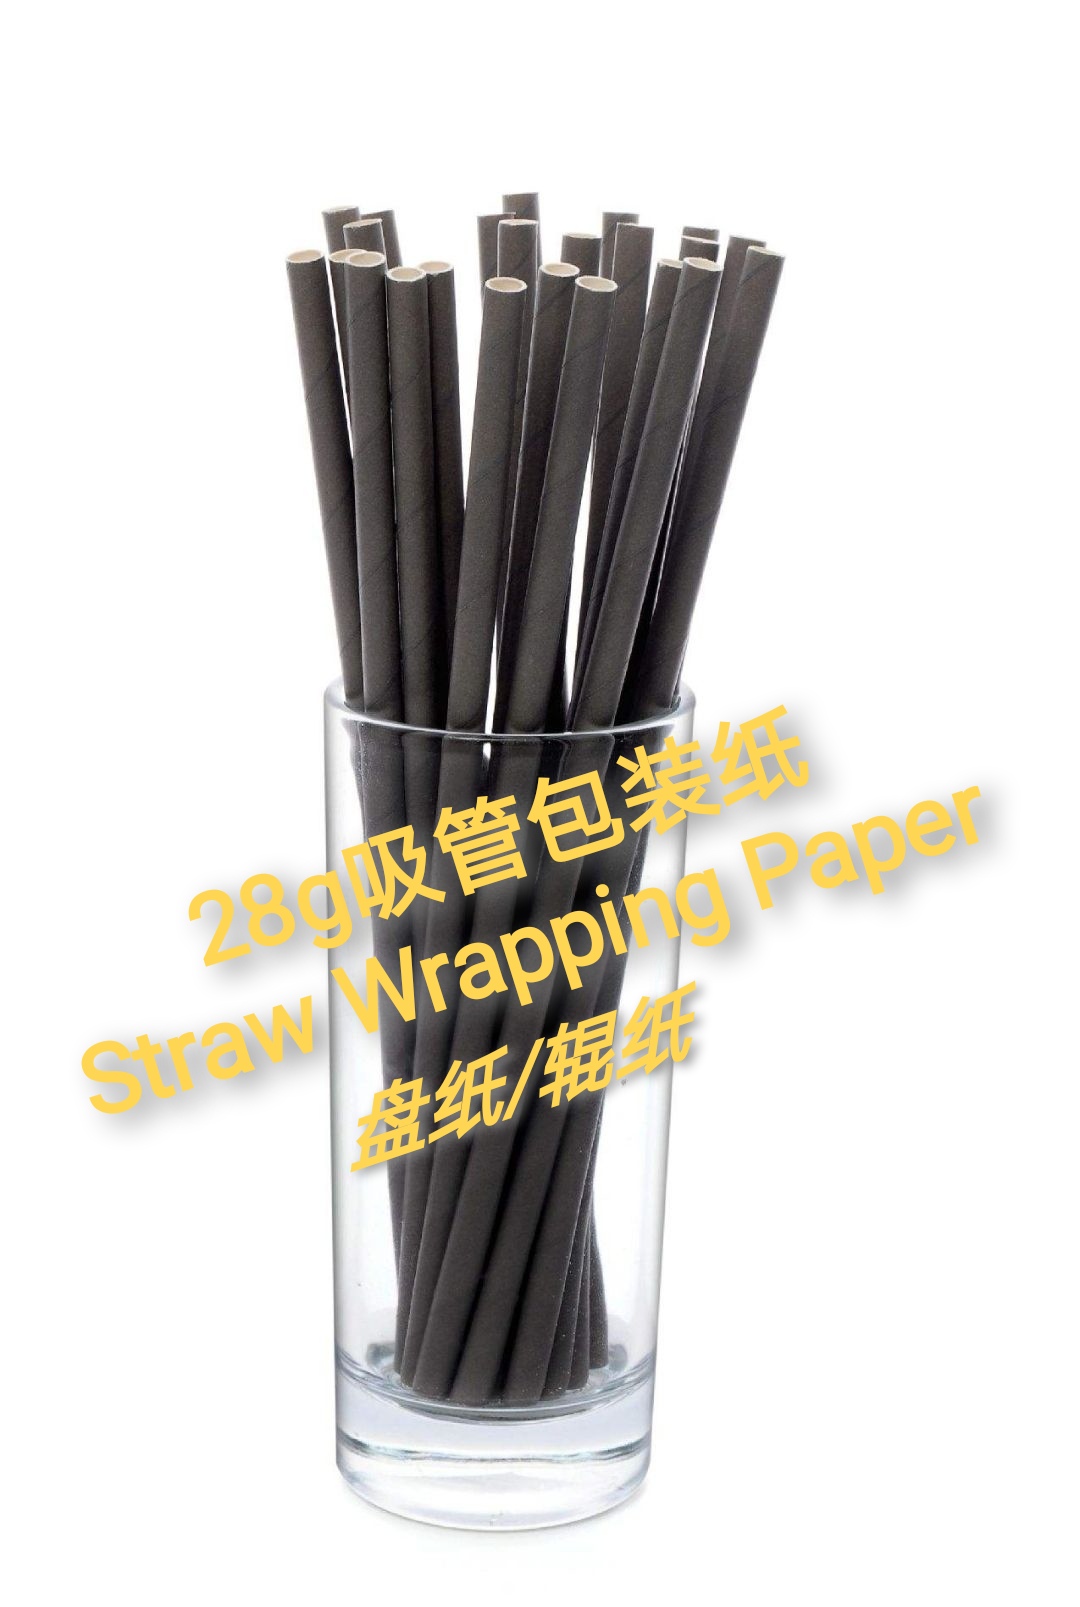 28g优质吸管包装盘纸 Straw Wrapping Paper
产品：28gx29mmx5000mx160盘纸
材质：详情图2